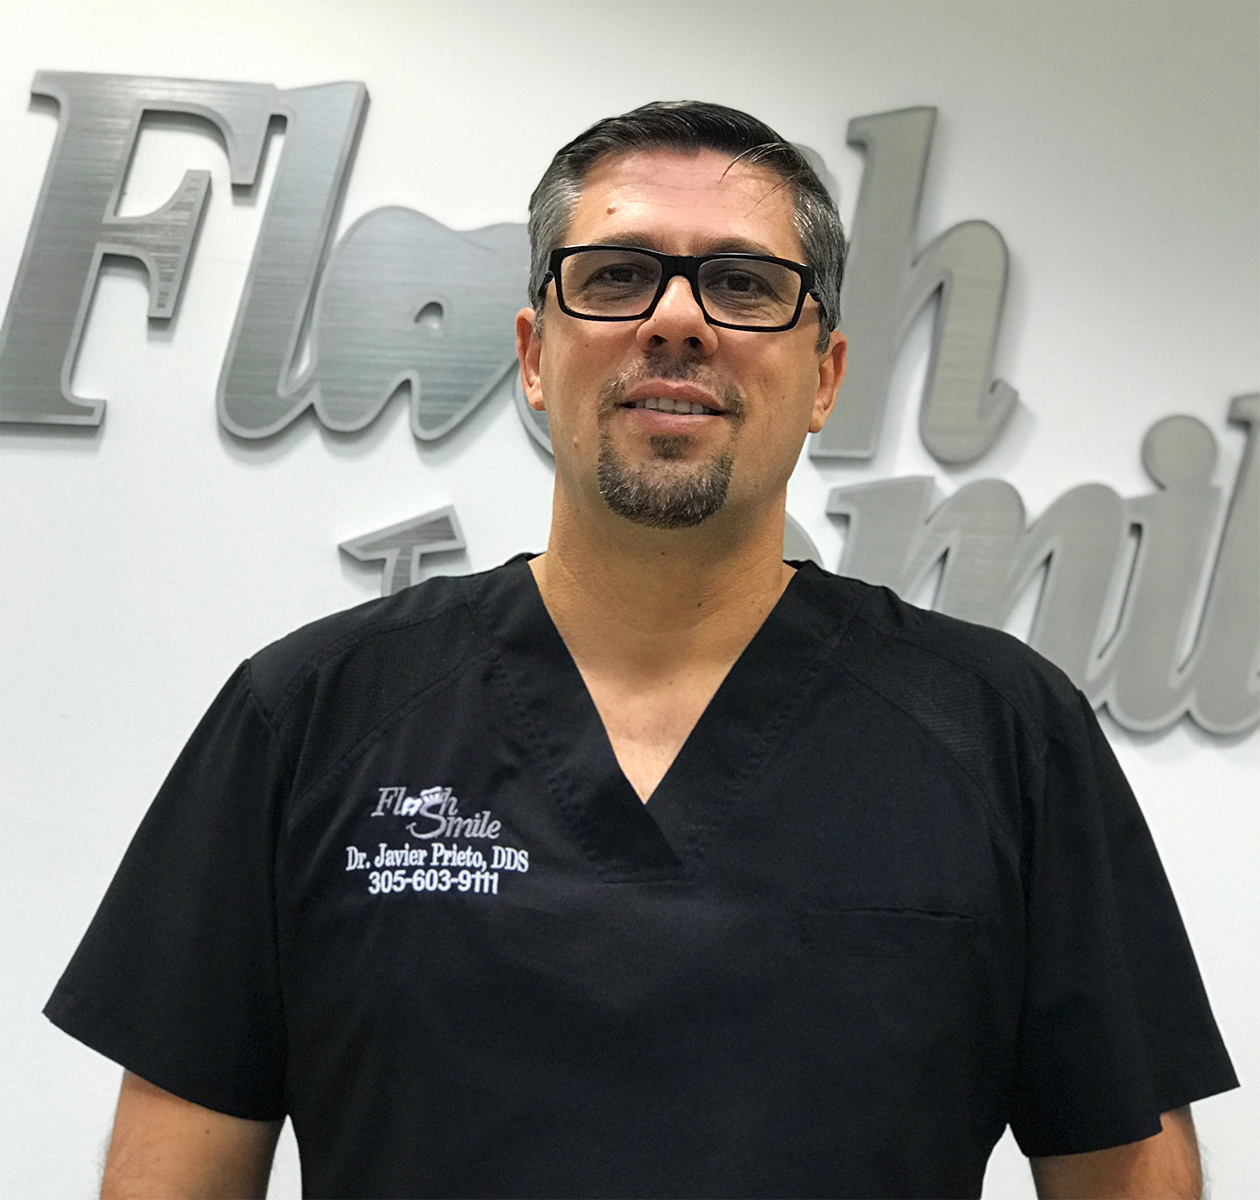 Best of Doral™ Dental presents Dr. Javier Prieto.